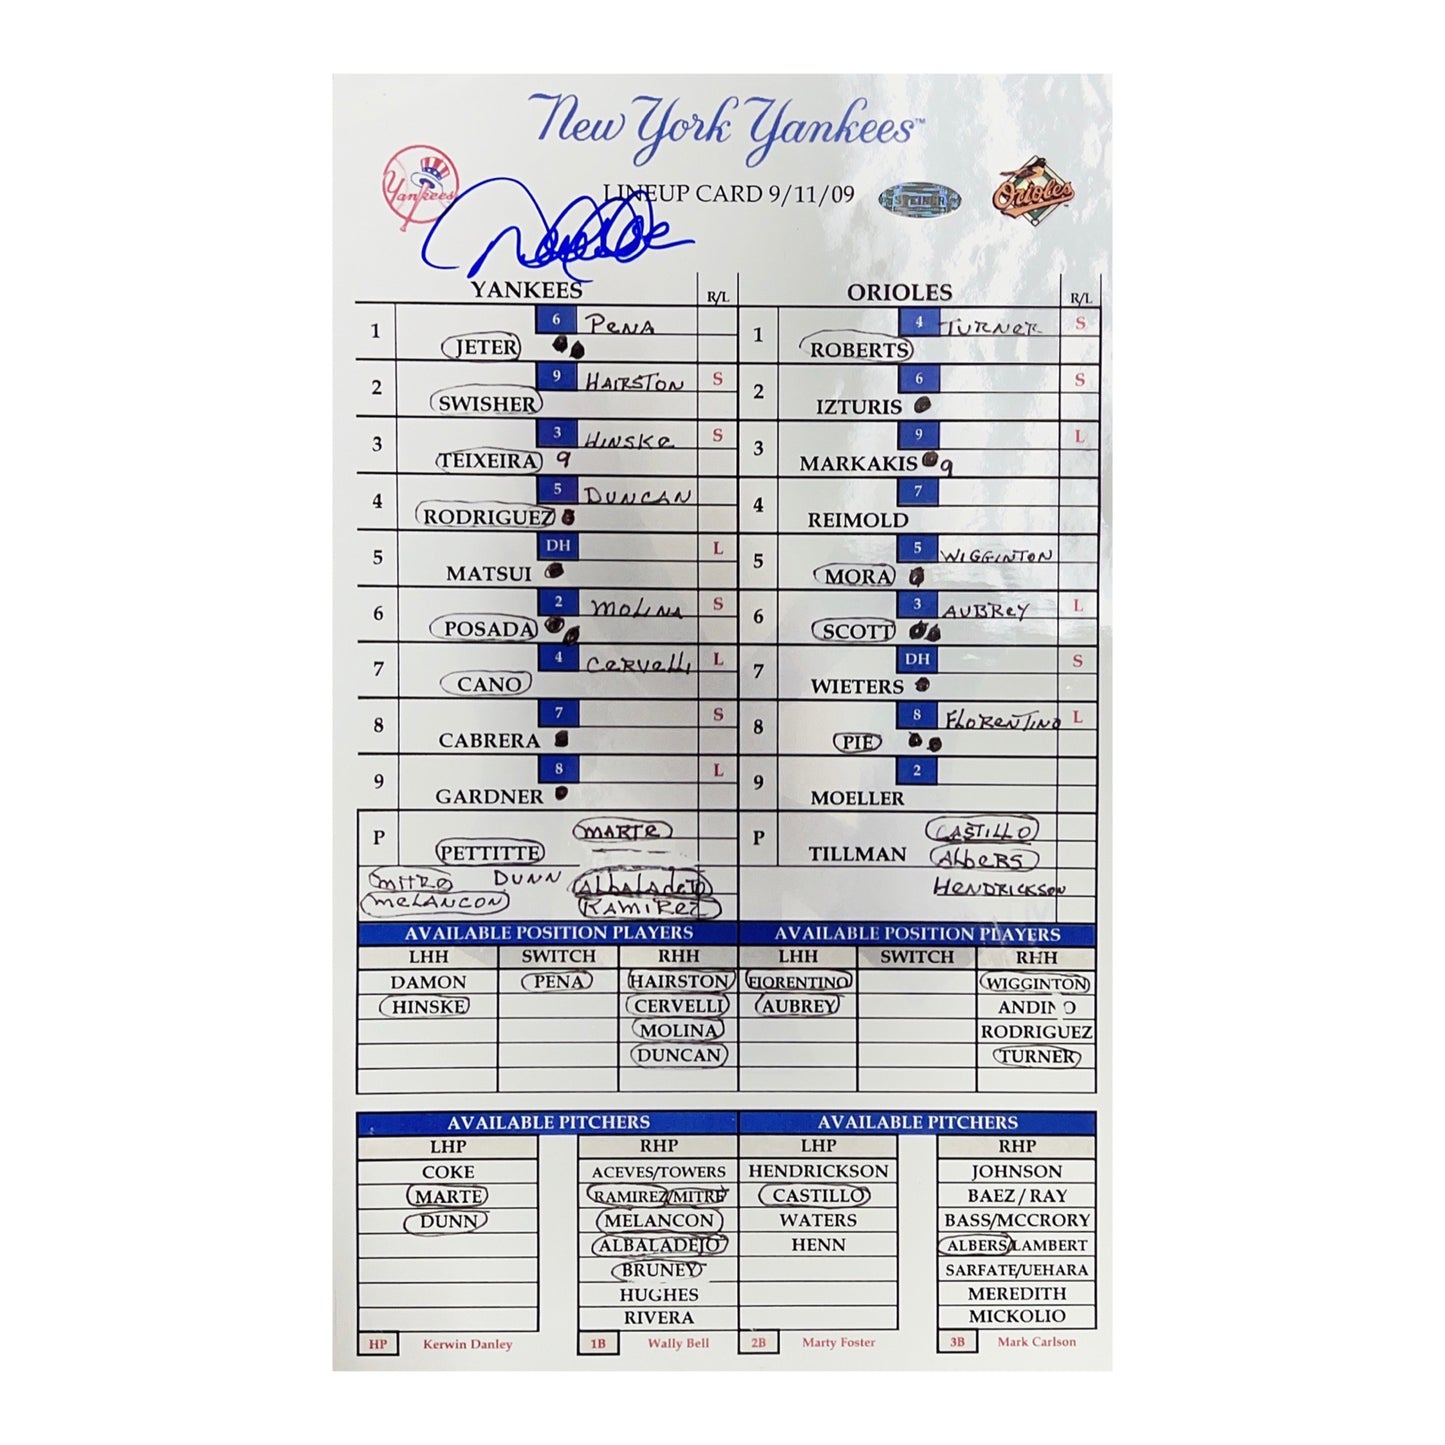 Derek Jeter Autographed New York Yankees Replica 9/11/09 Lineup Card Steiner